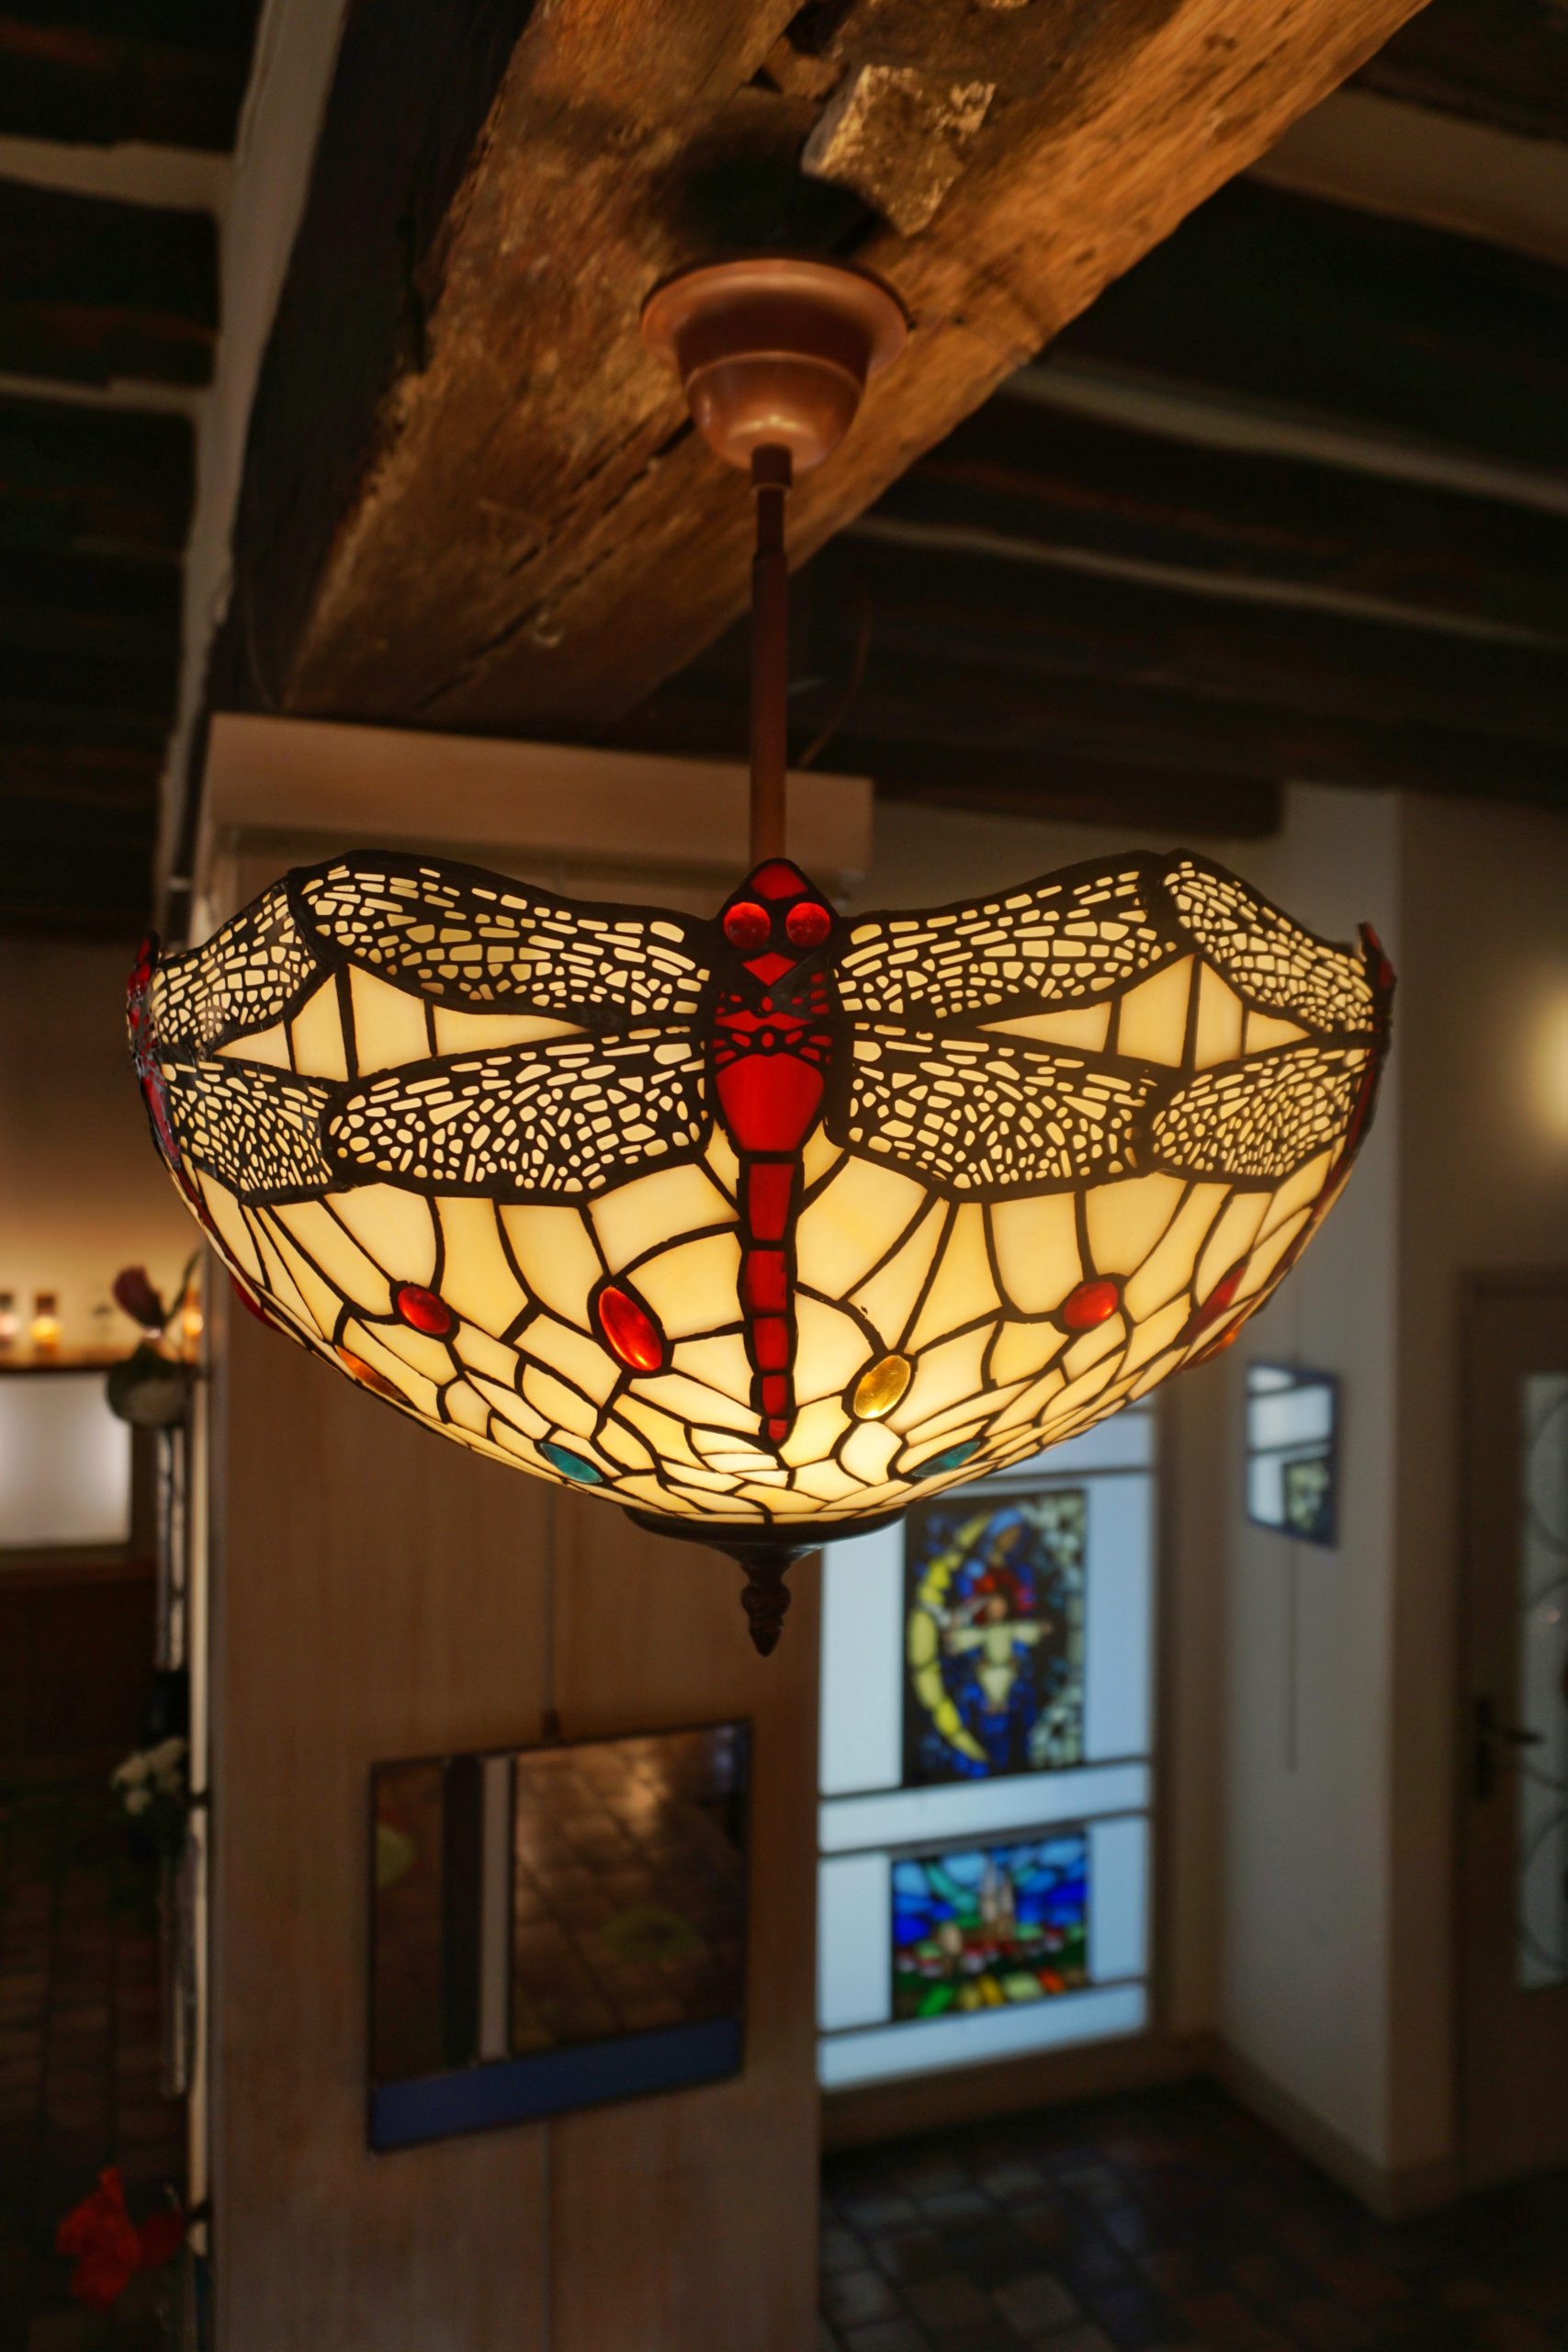 Acheter Lampe Tiffany 16639 + PBLM11 Online